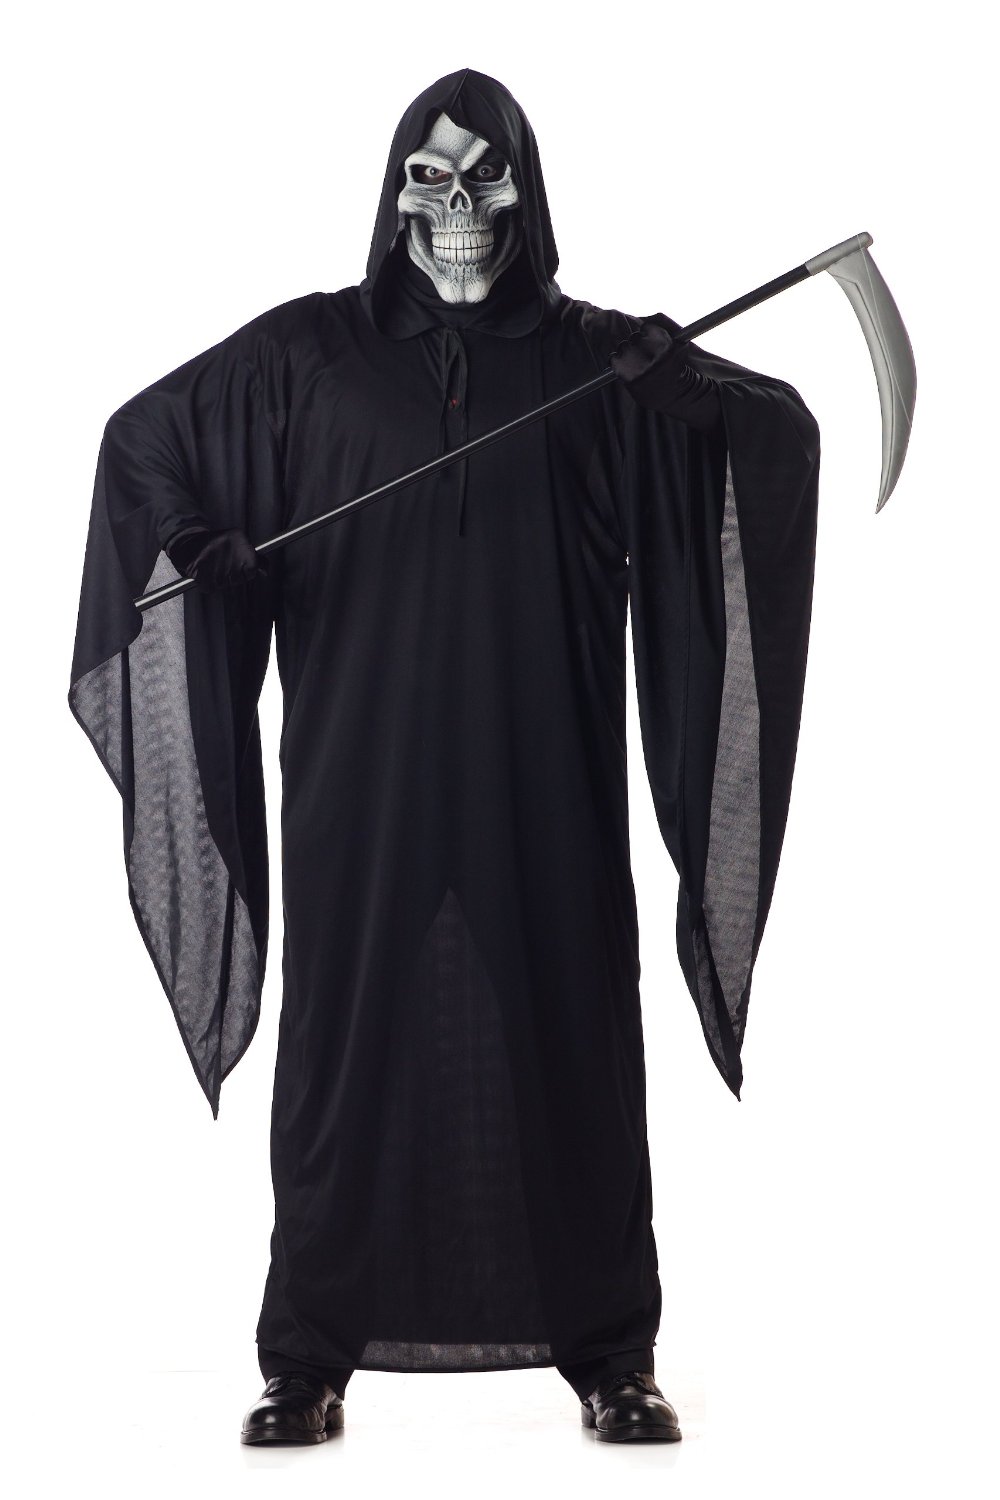 25 Halloween Costumes Ideas For Men 2015 - InspirationSeek.com